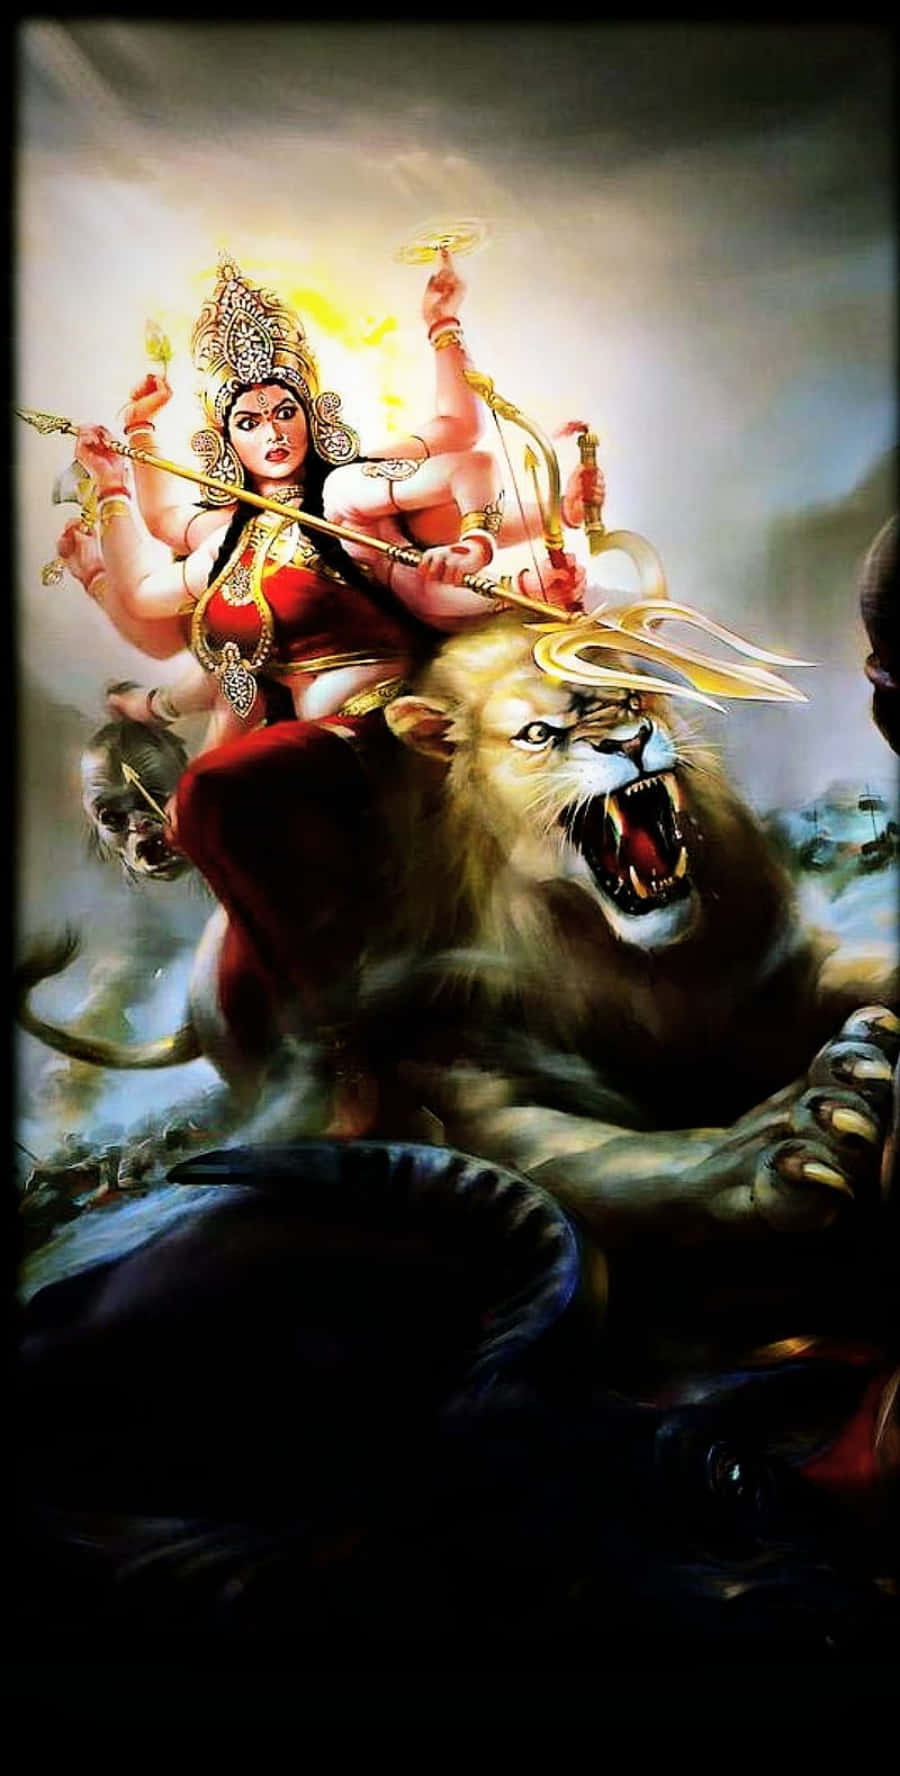 Imagende La Diosa Guerrera Durga Maa